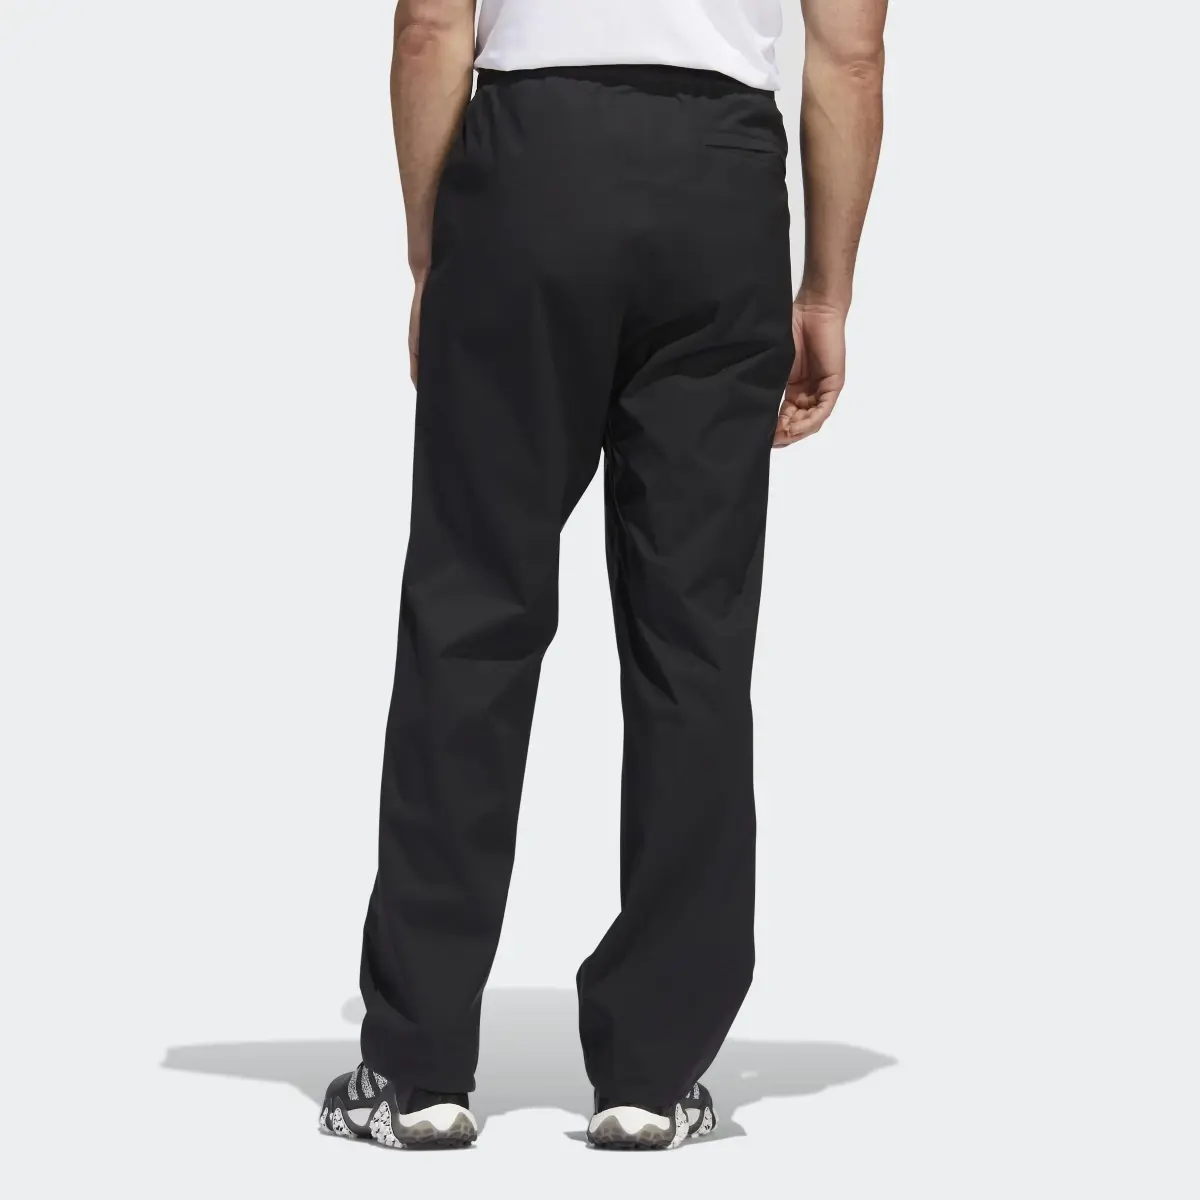 Adidas Provisional Golf Pants. 2